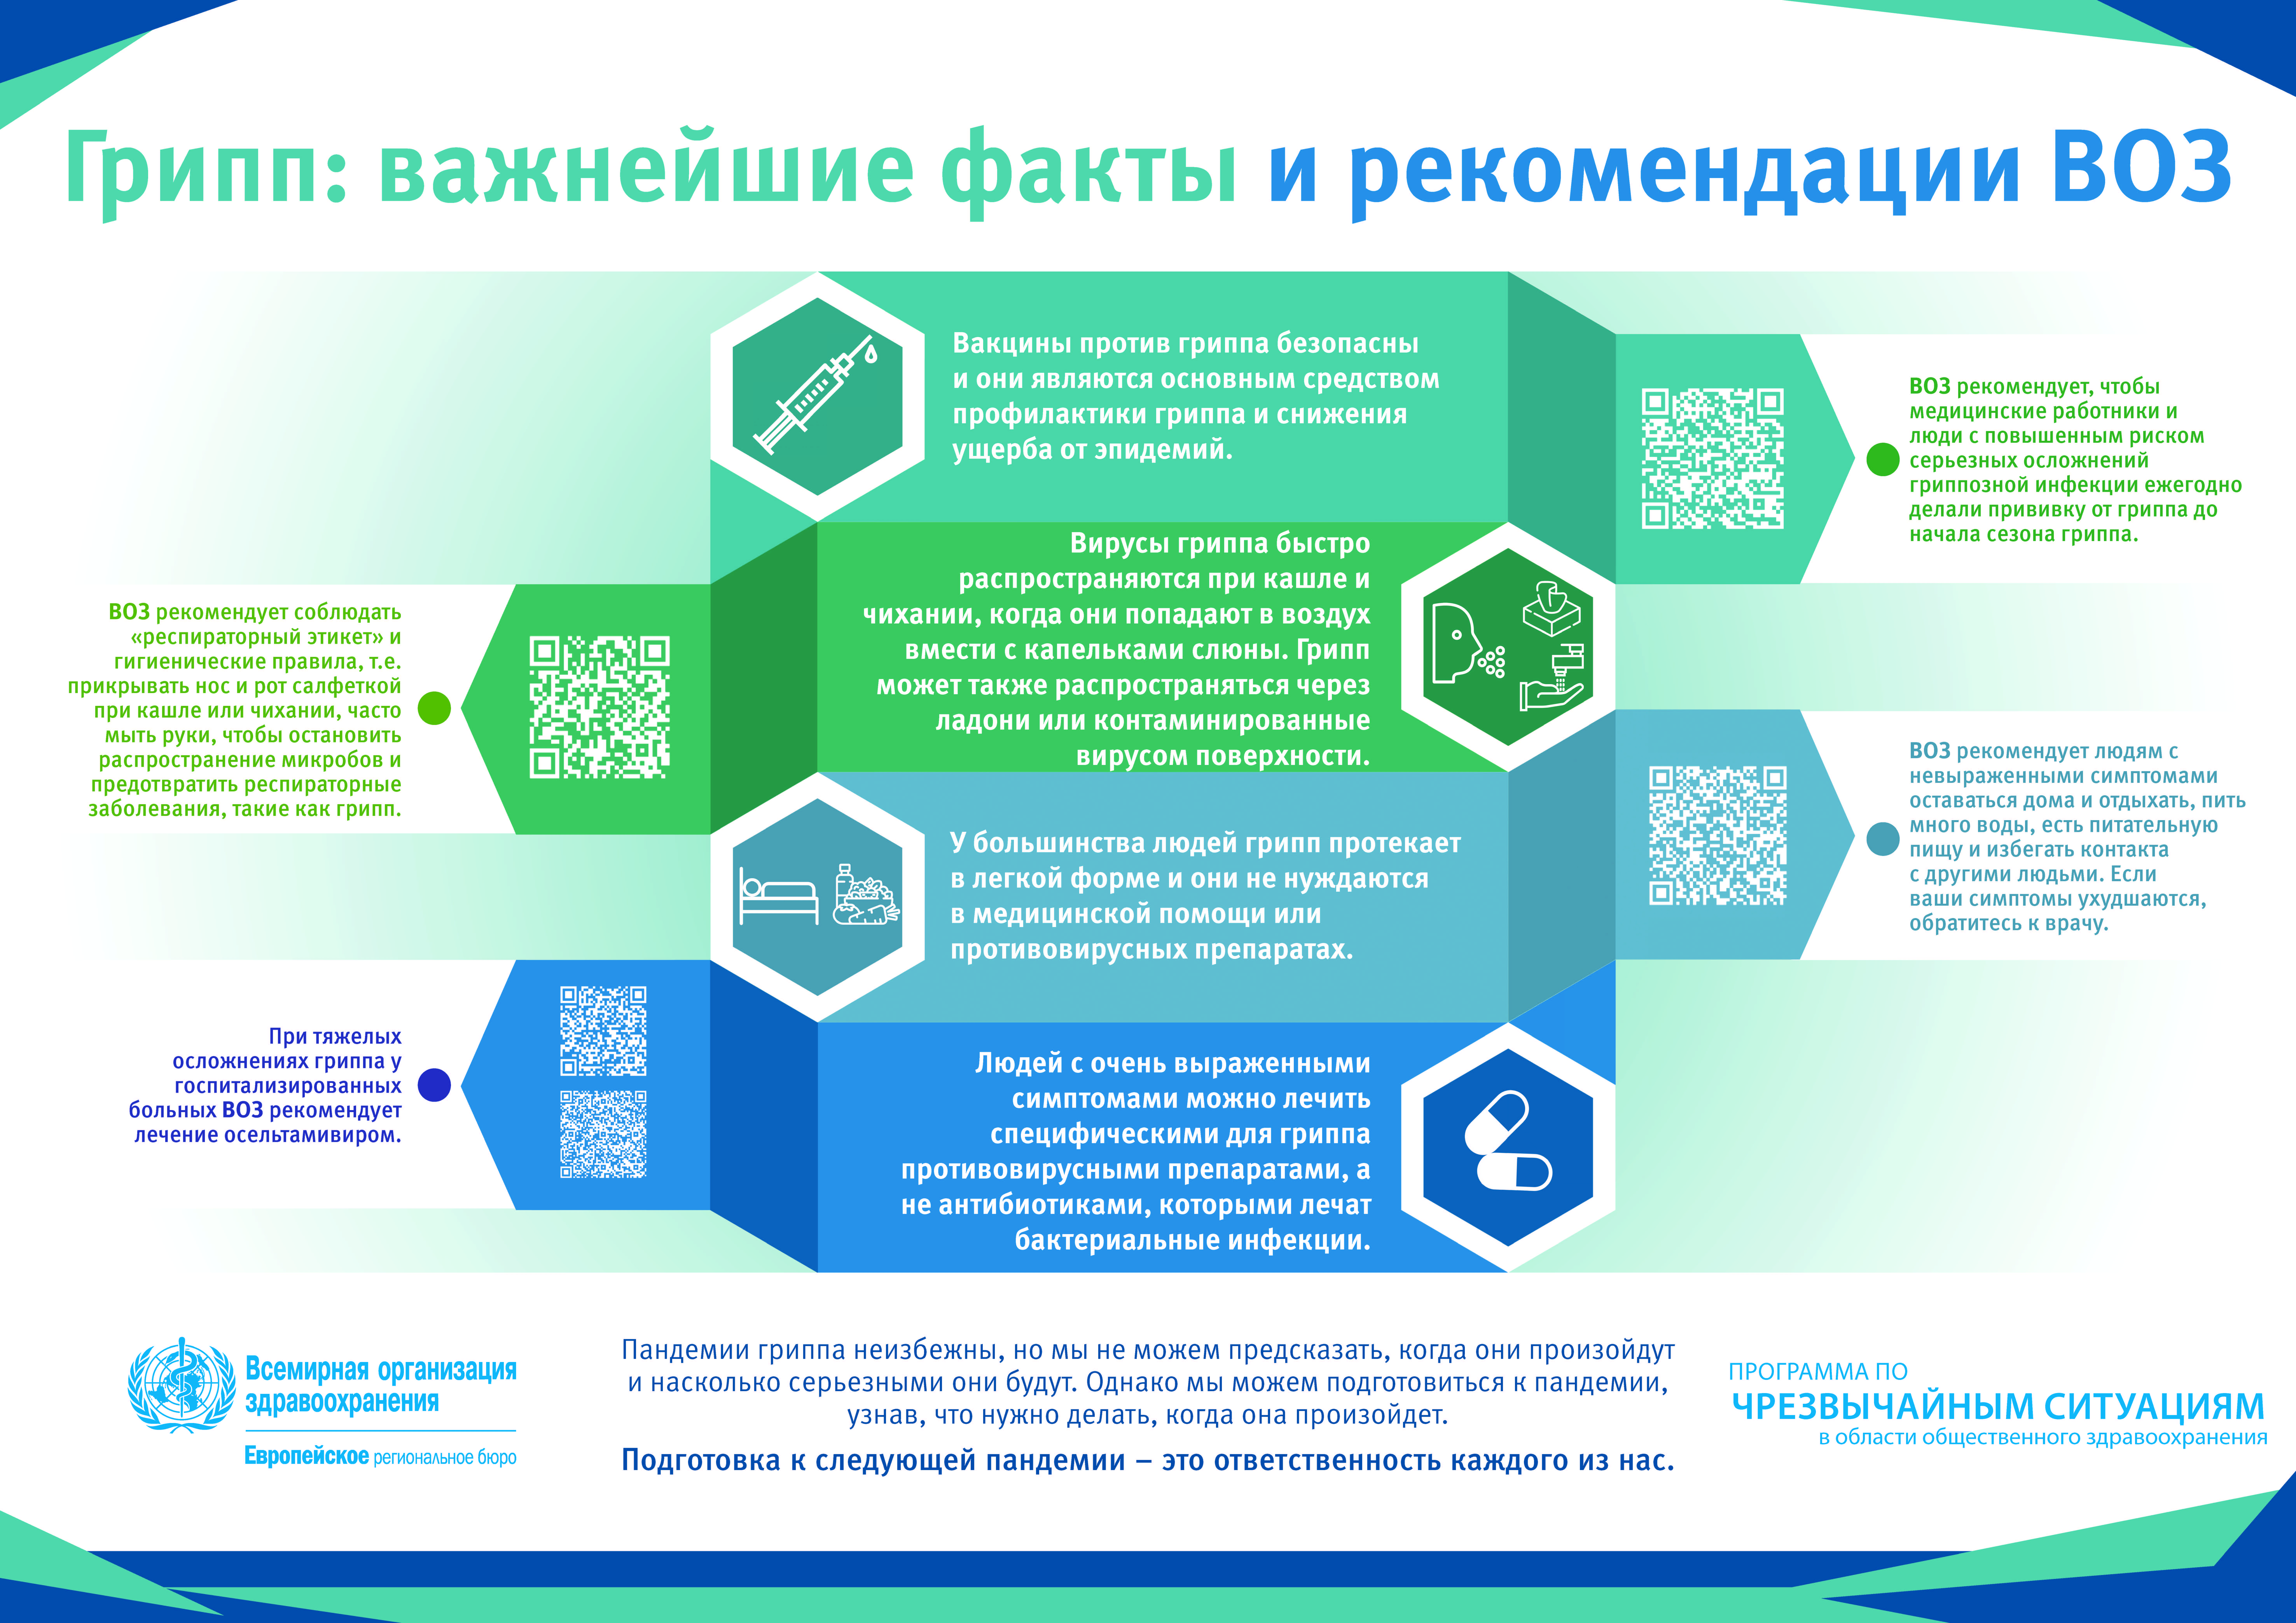  upload iblock 054 01influenza infographic rus